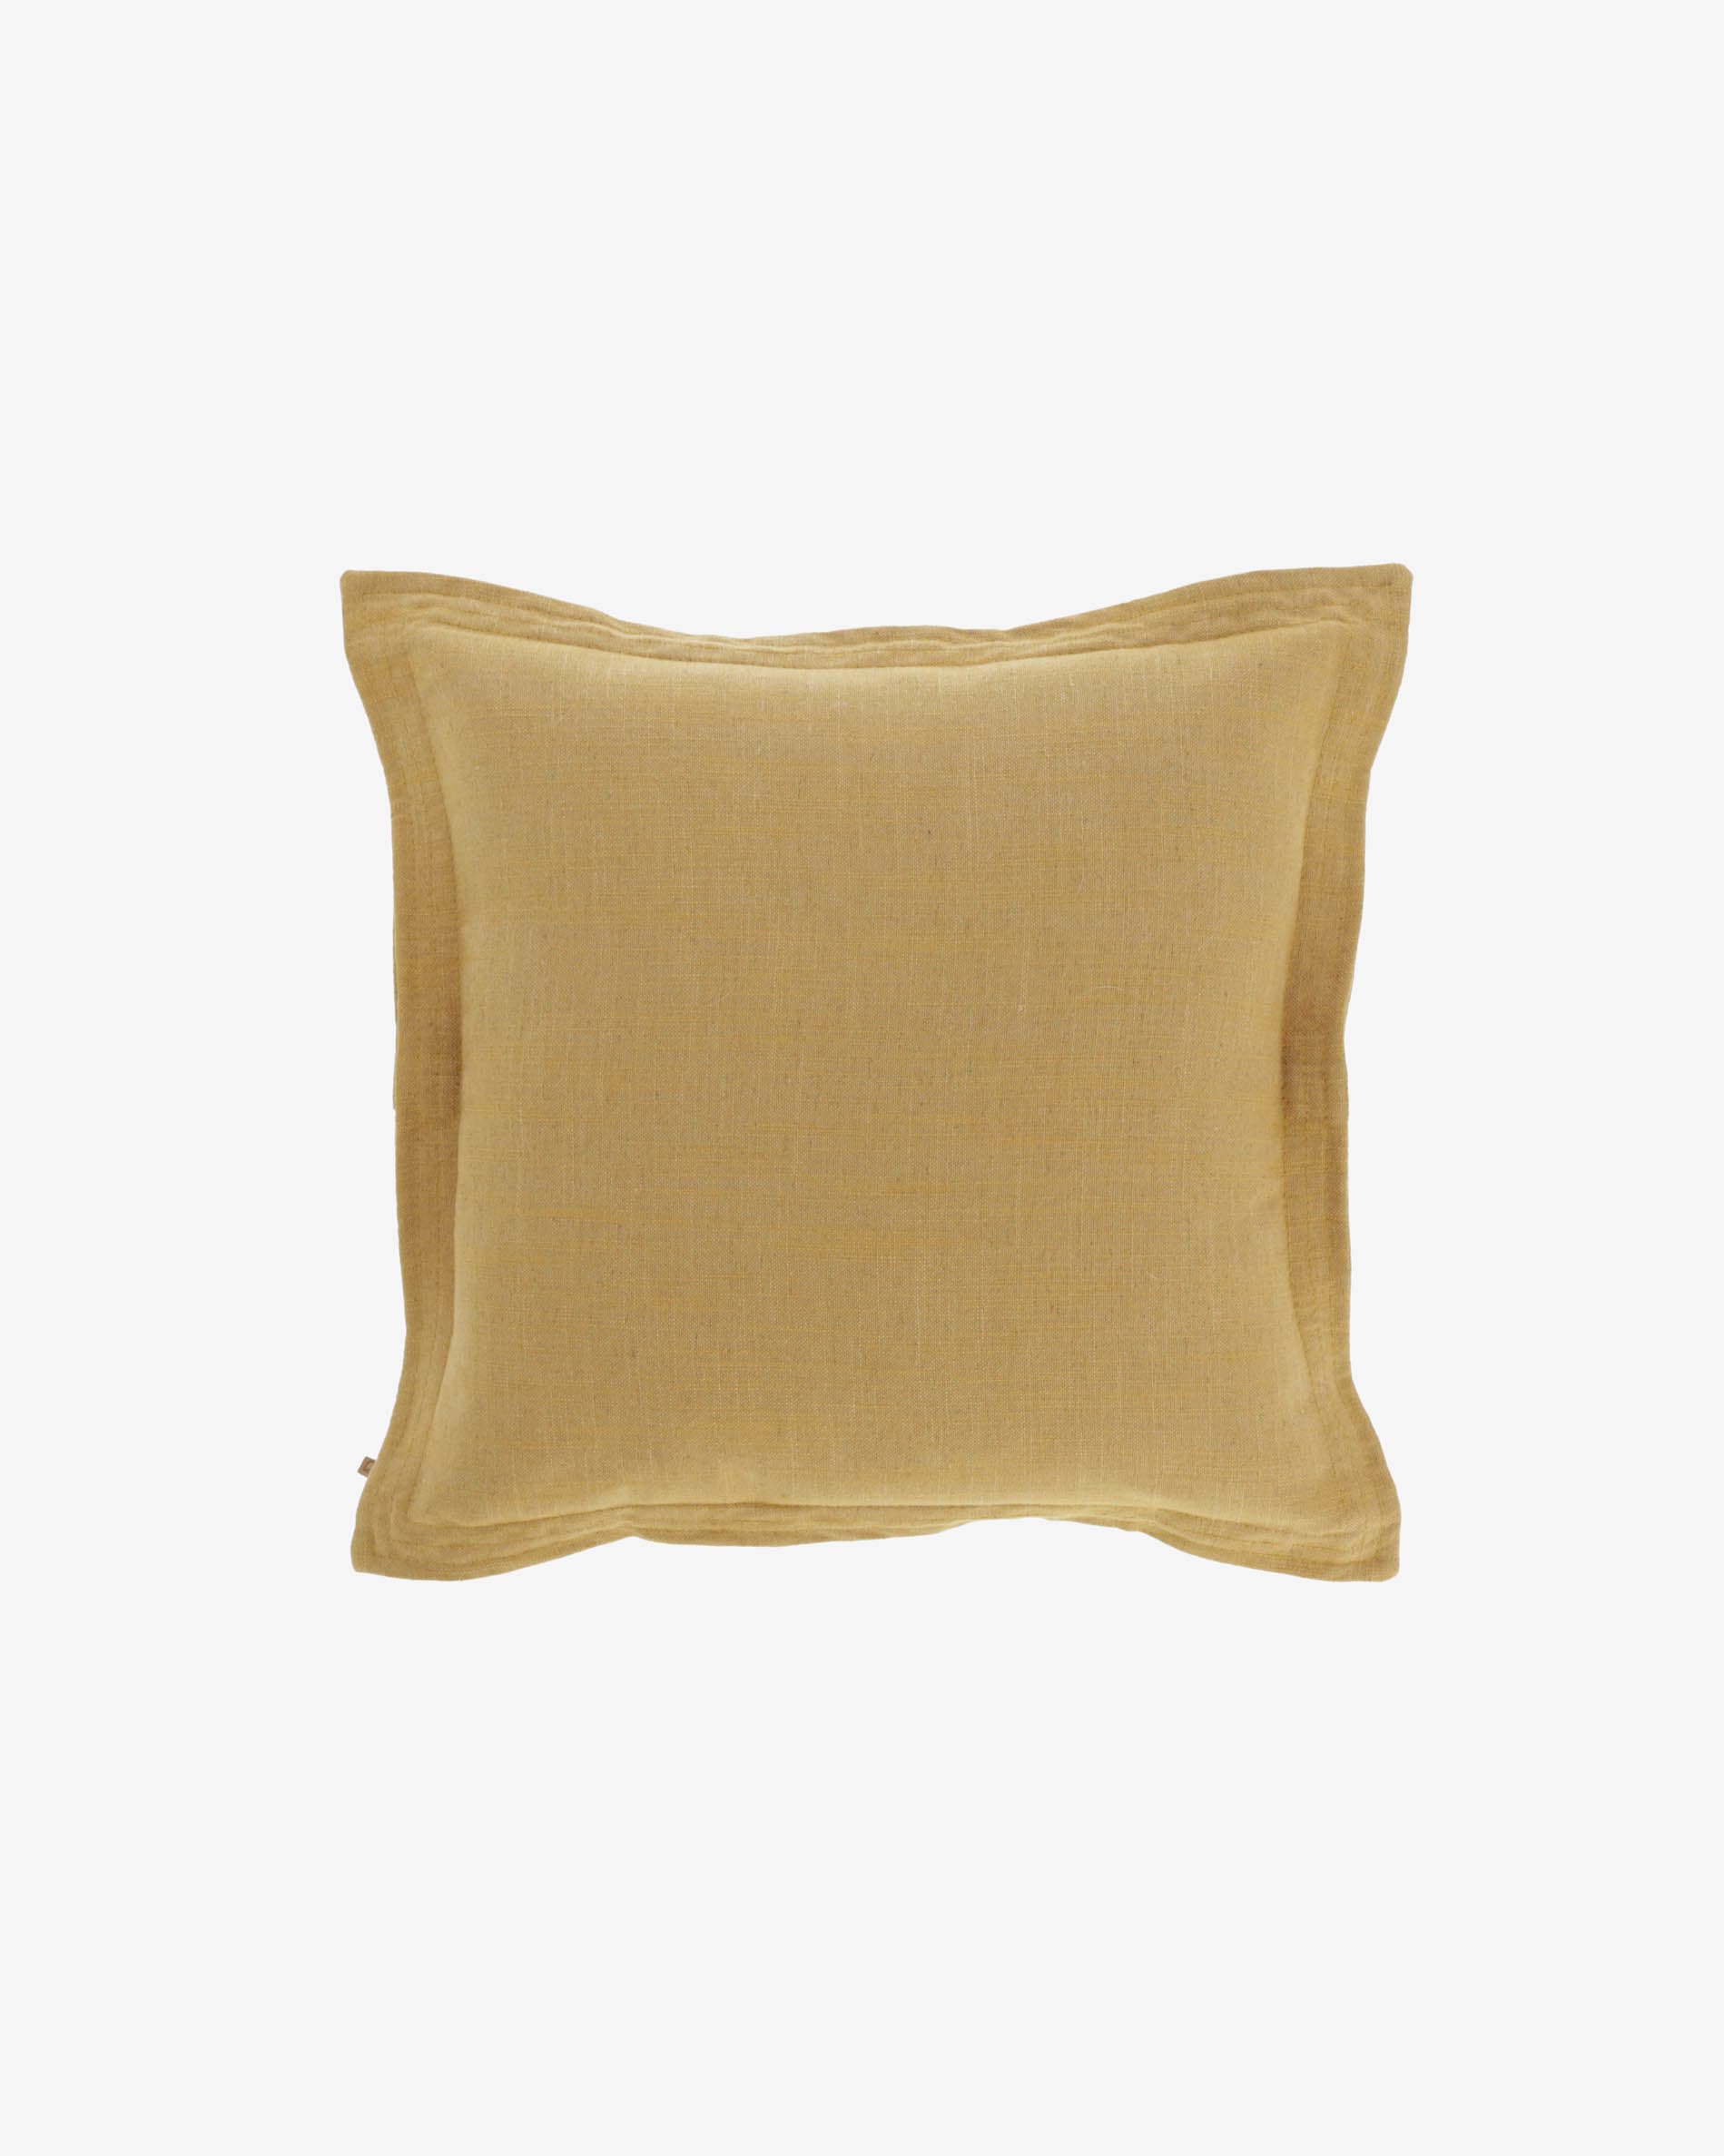 Maelina cushion cover in mustard, 45 x 45 cm